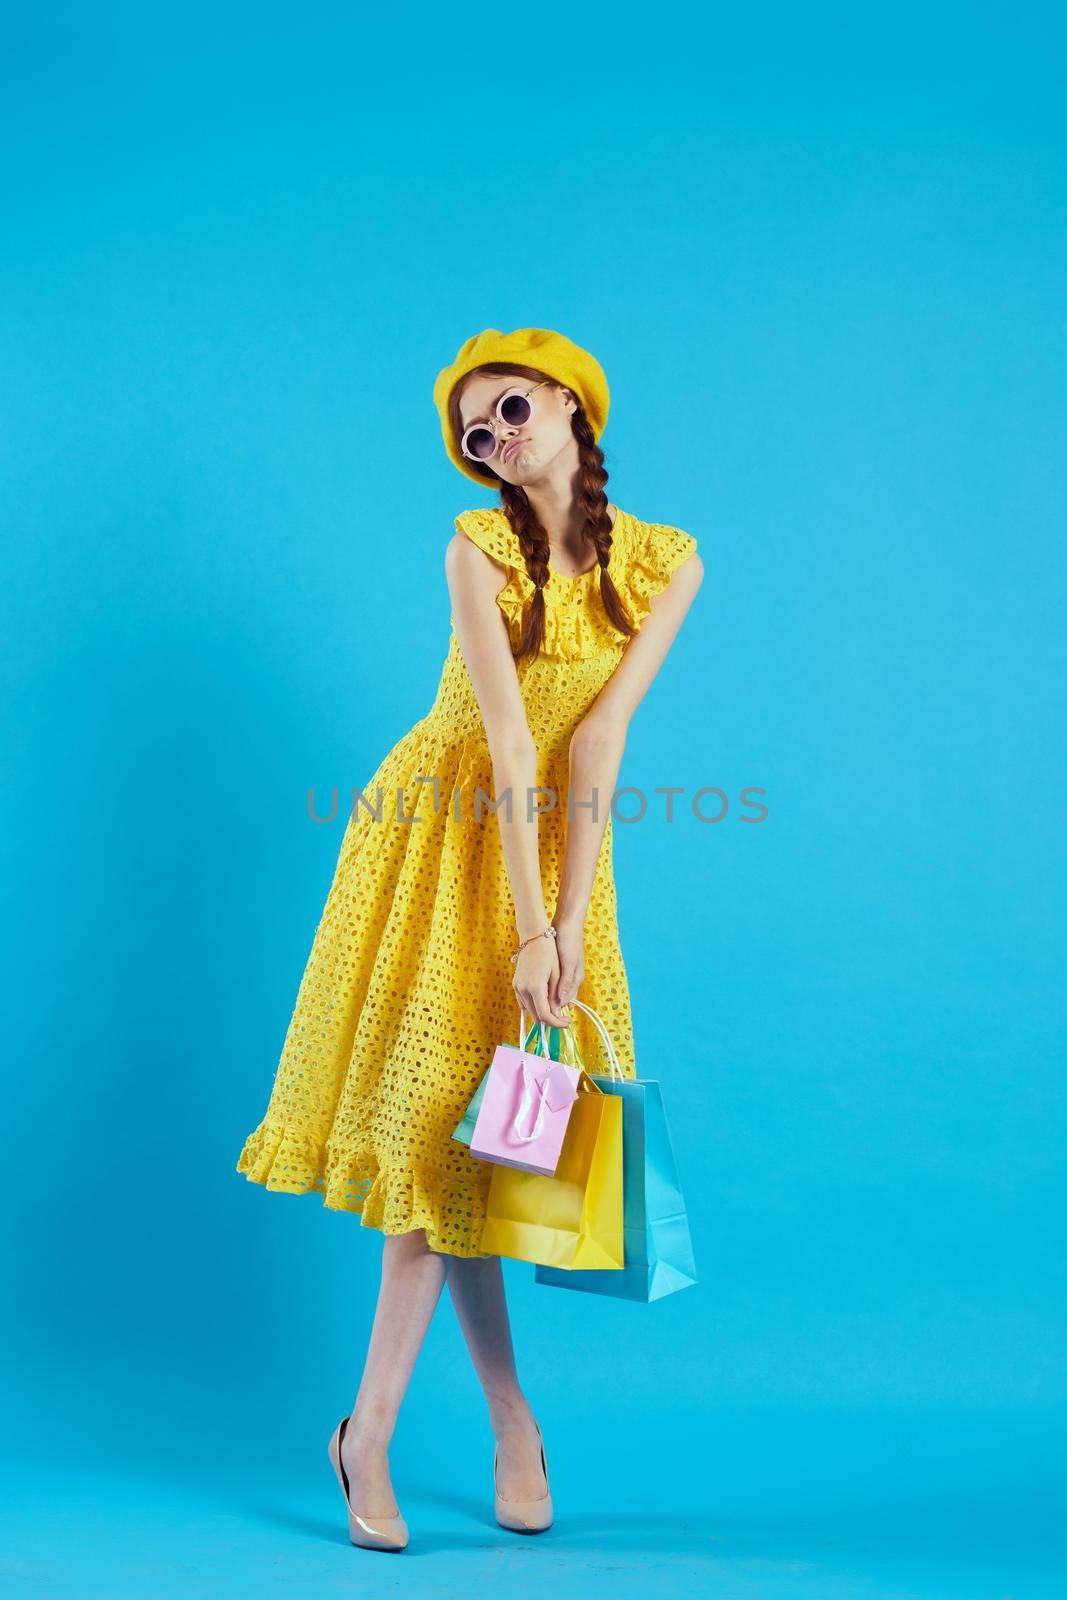 smiling woman yellow dress shopping fun blue background. High quality photo